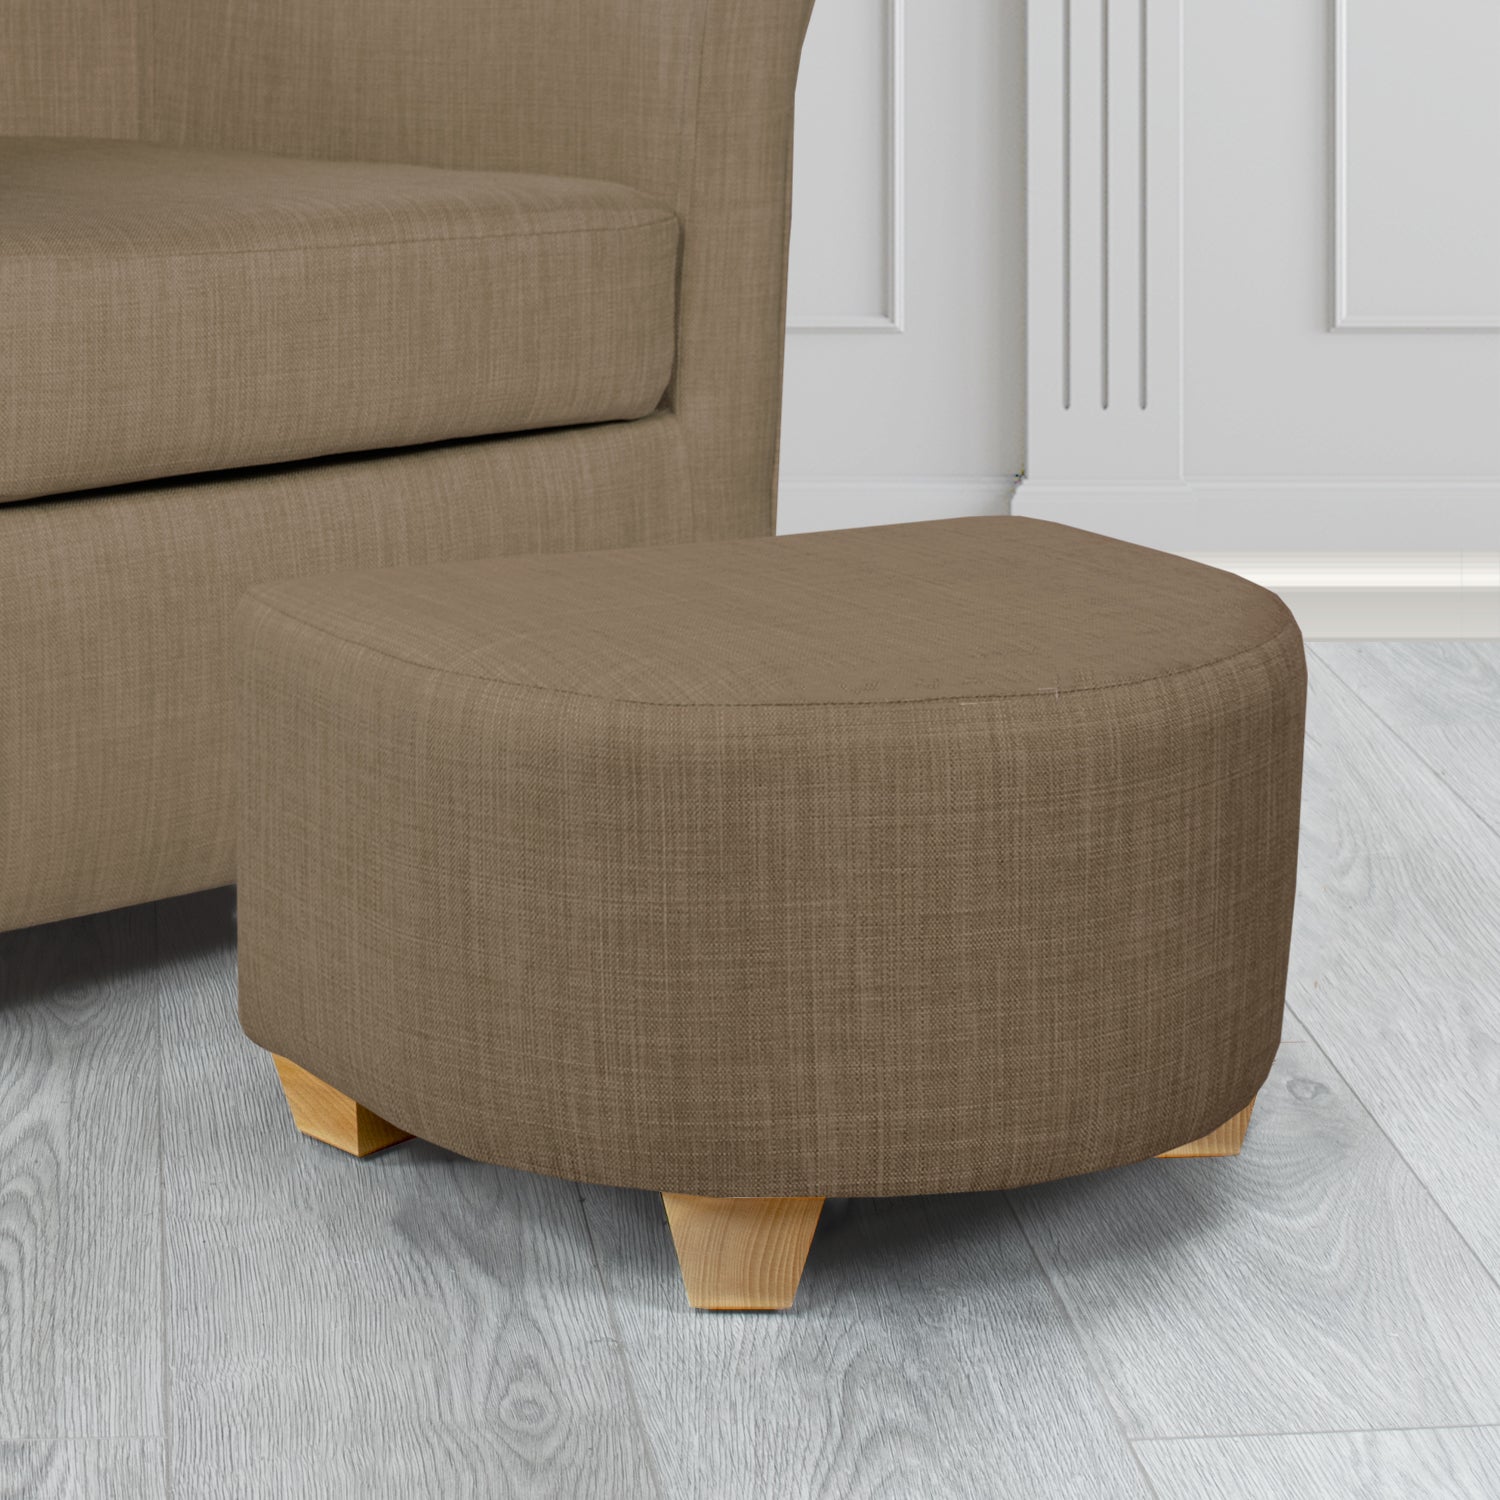 Cannes Charles Nutmeg Plain Linen Fabric Footstool - The Tub Chair Shop